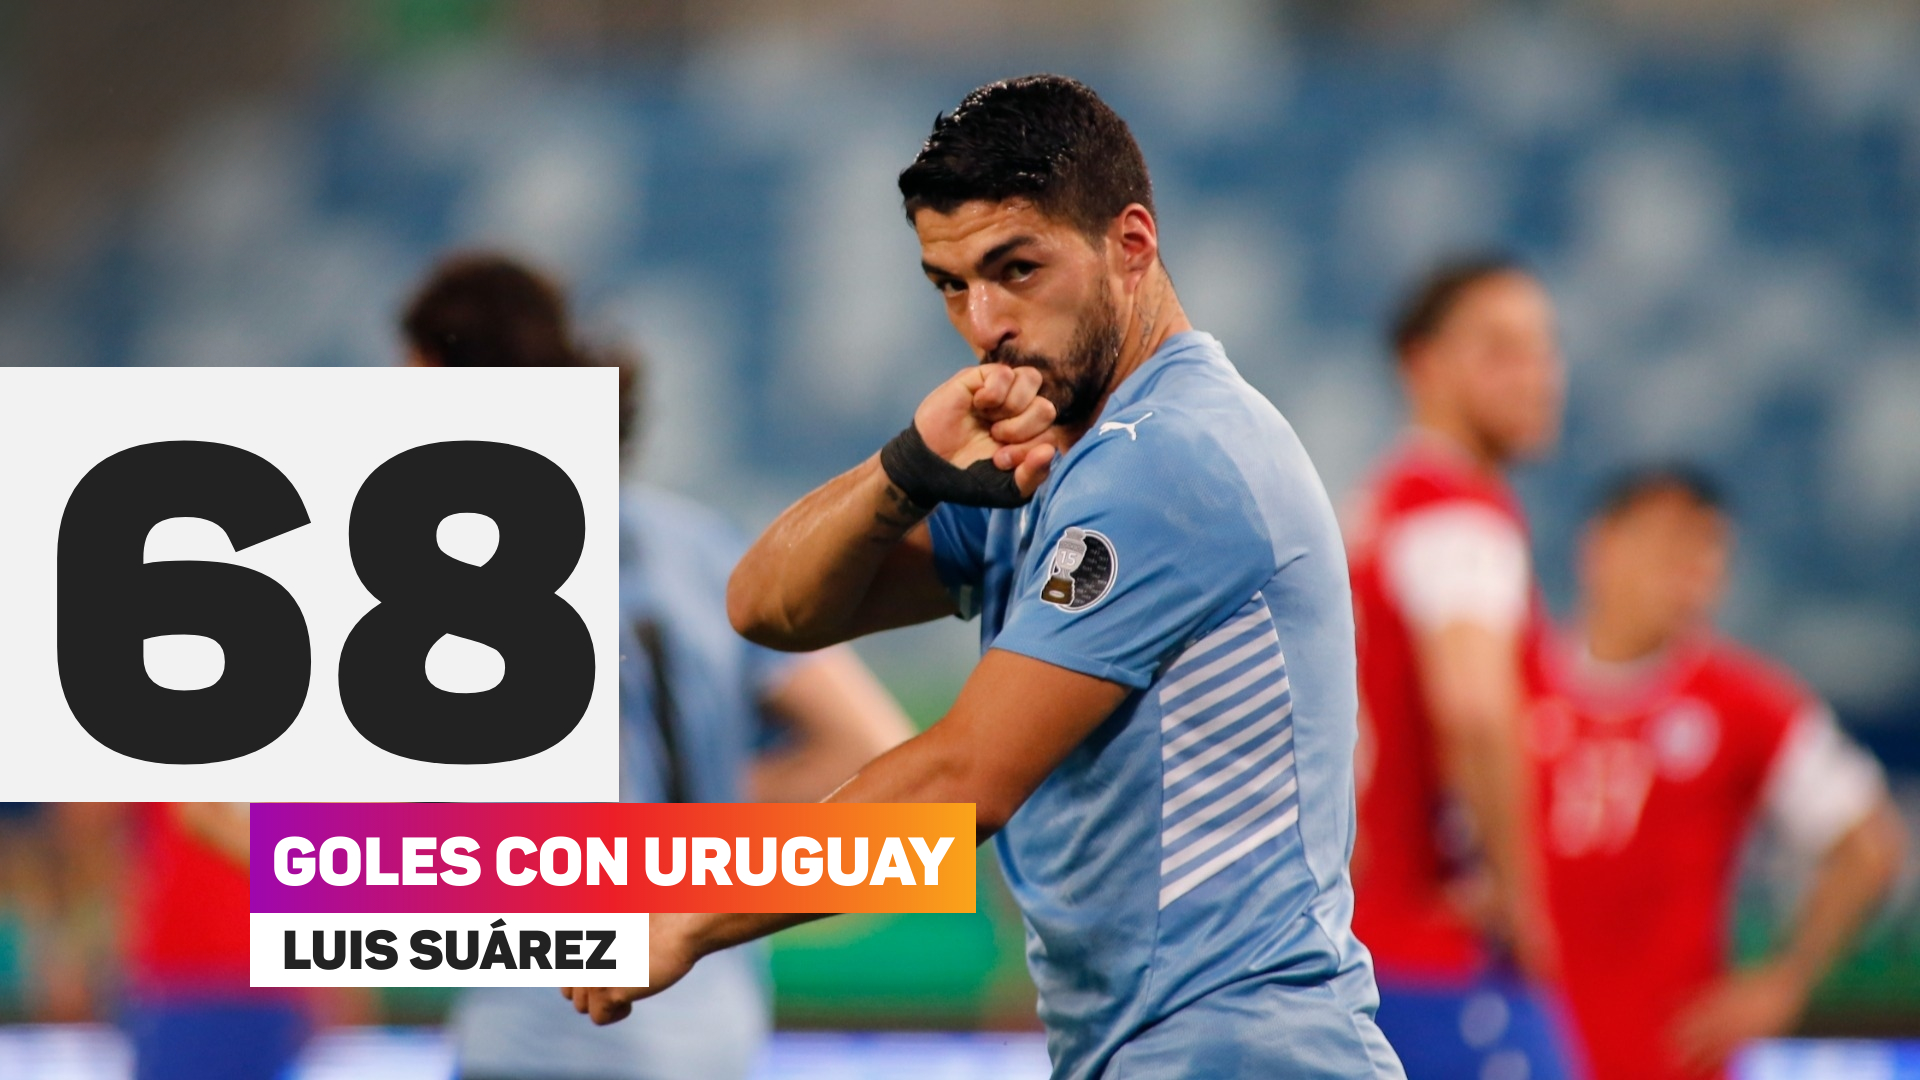 Luis Suarez Goles en Uruguay